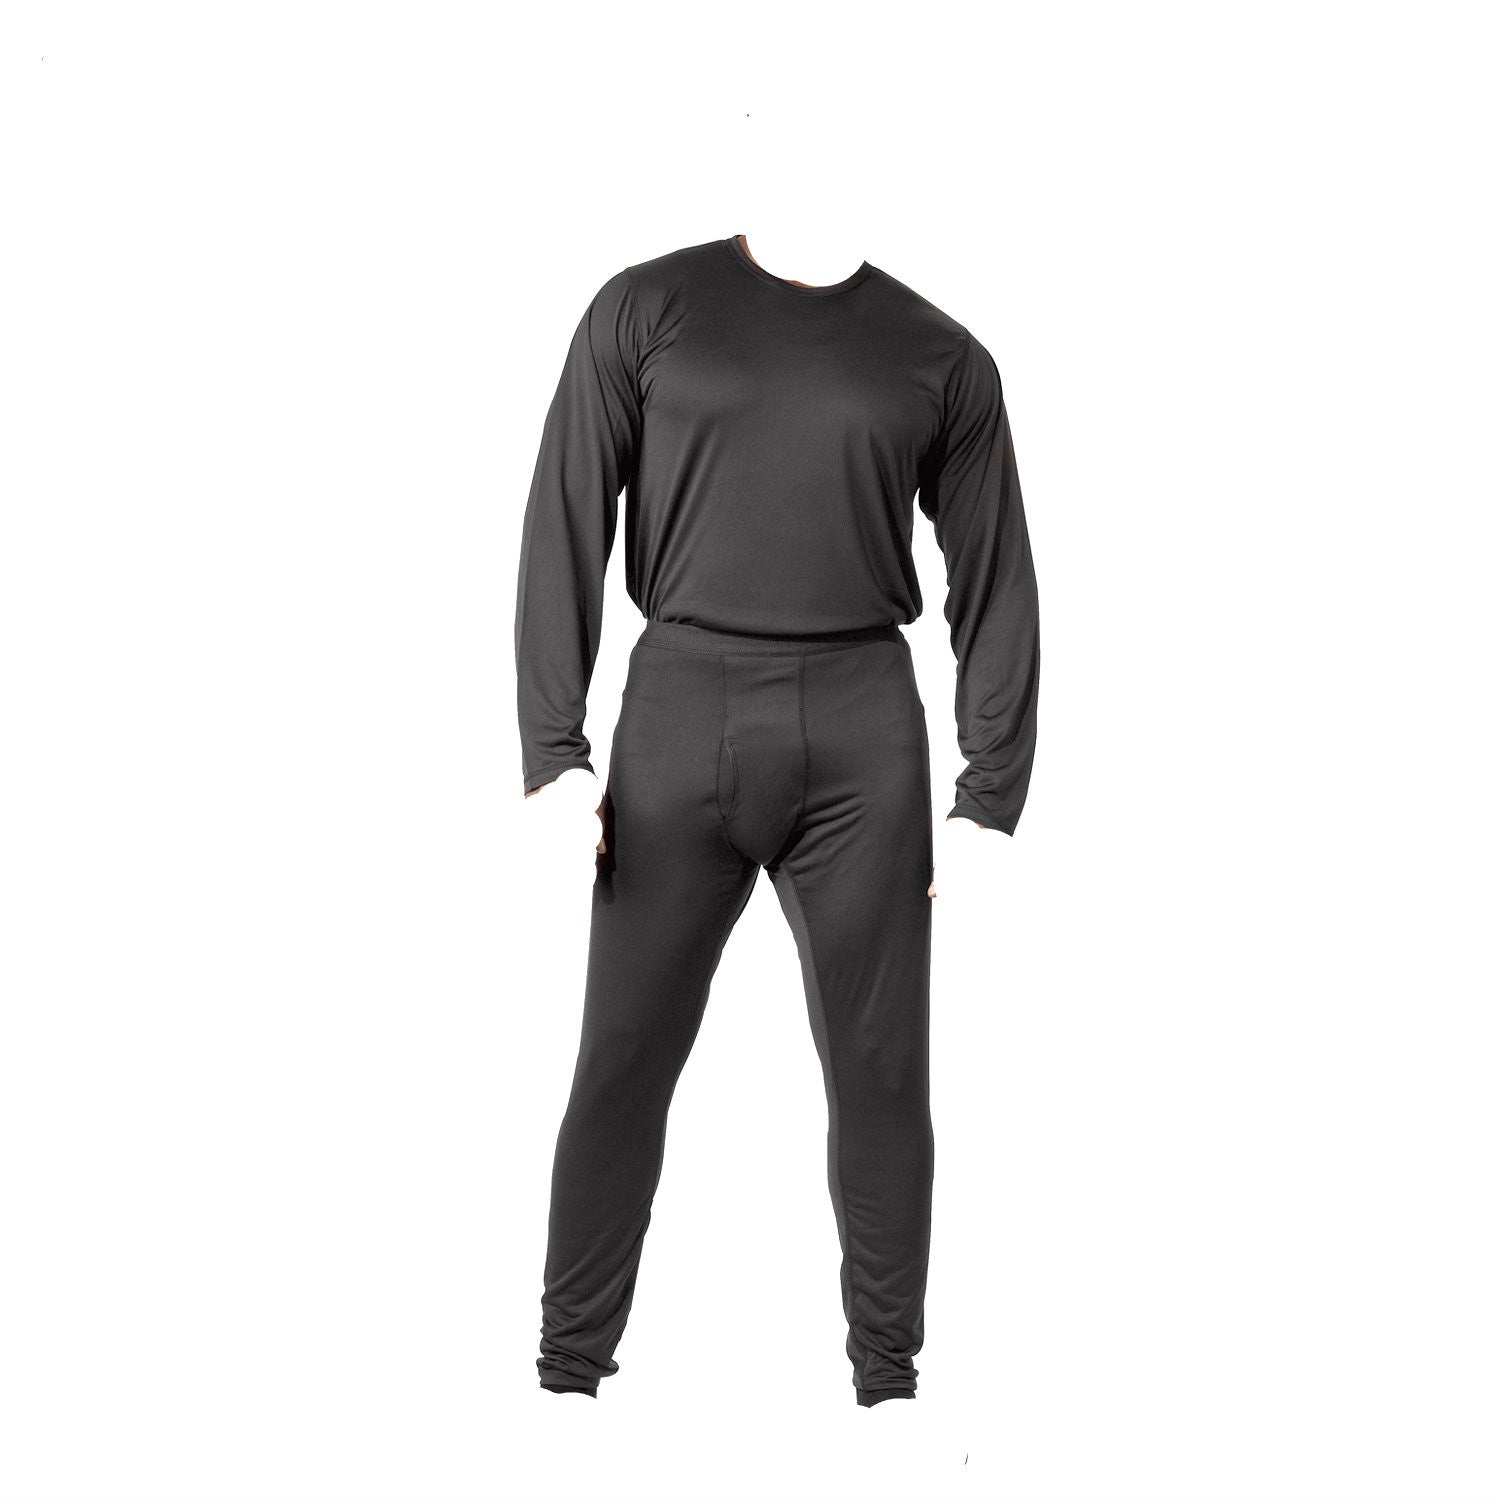 Gen III Level II Tactical Anti-Microbial Military Thermal Underwear